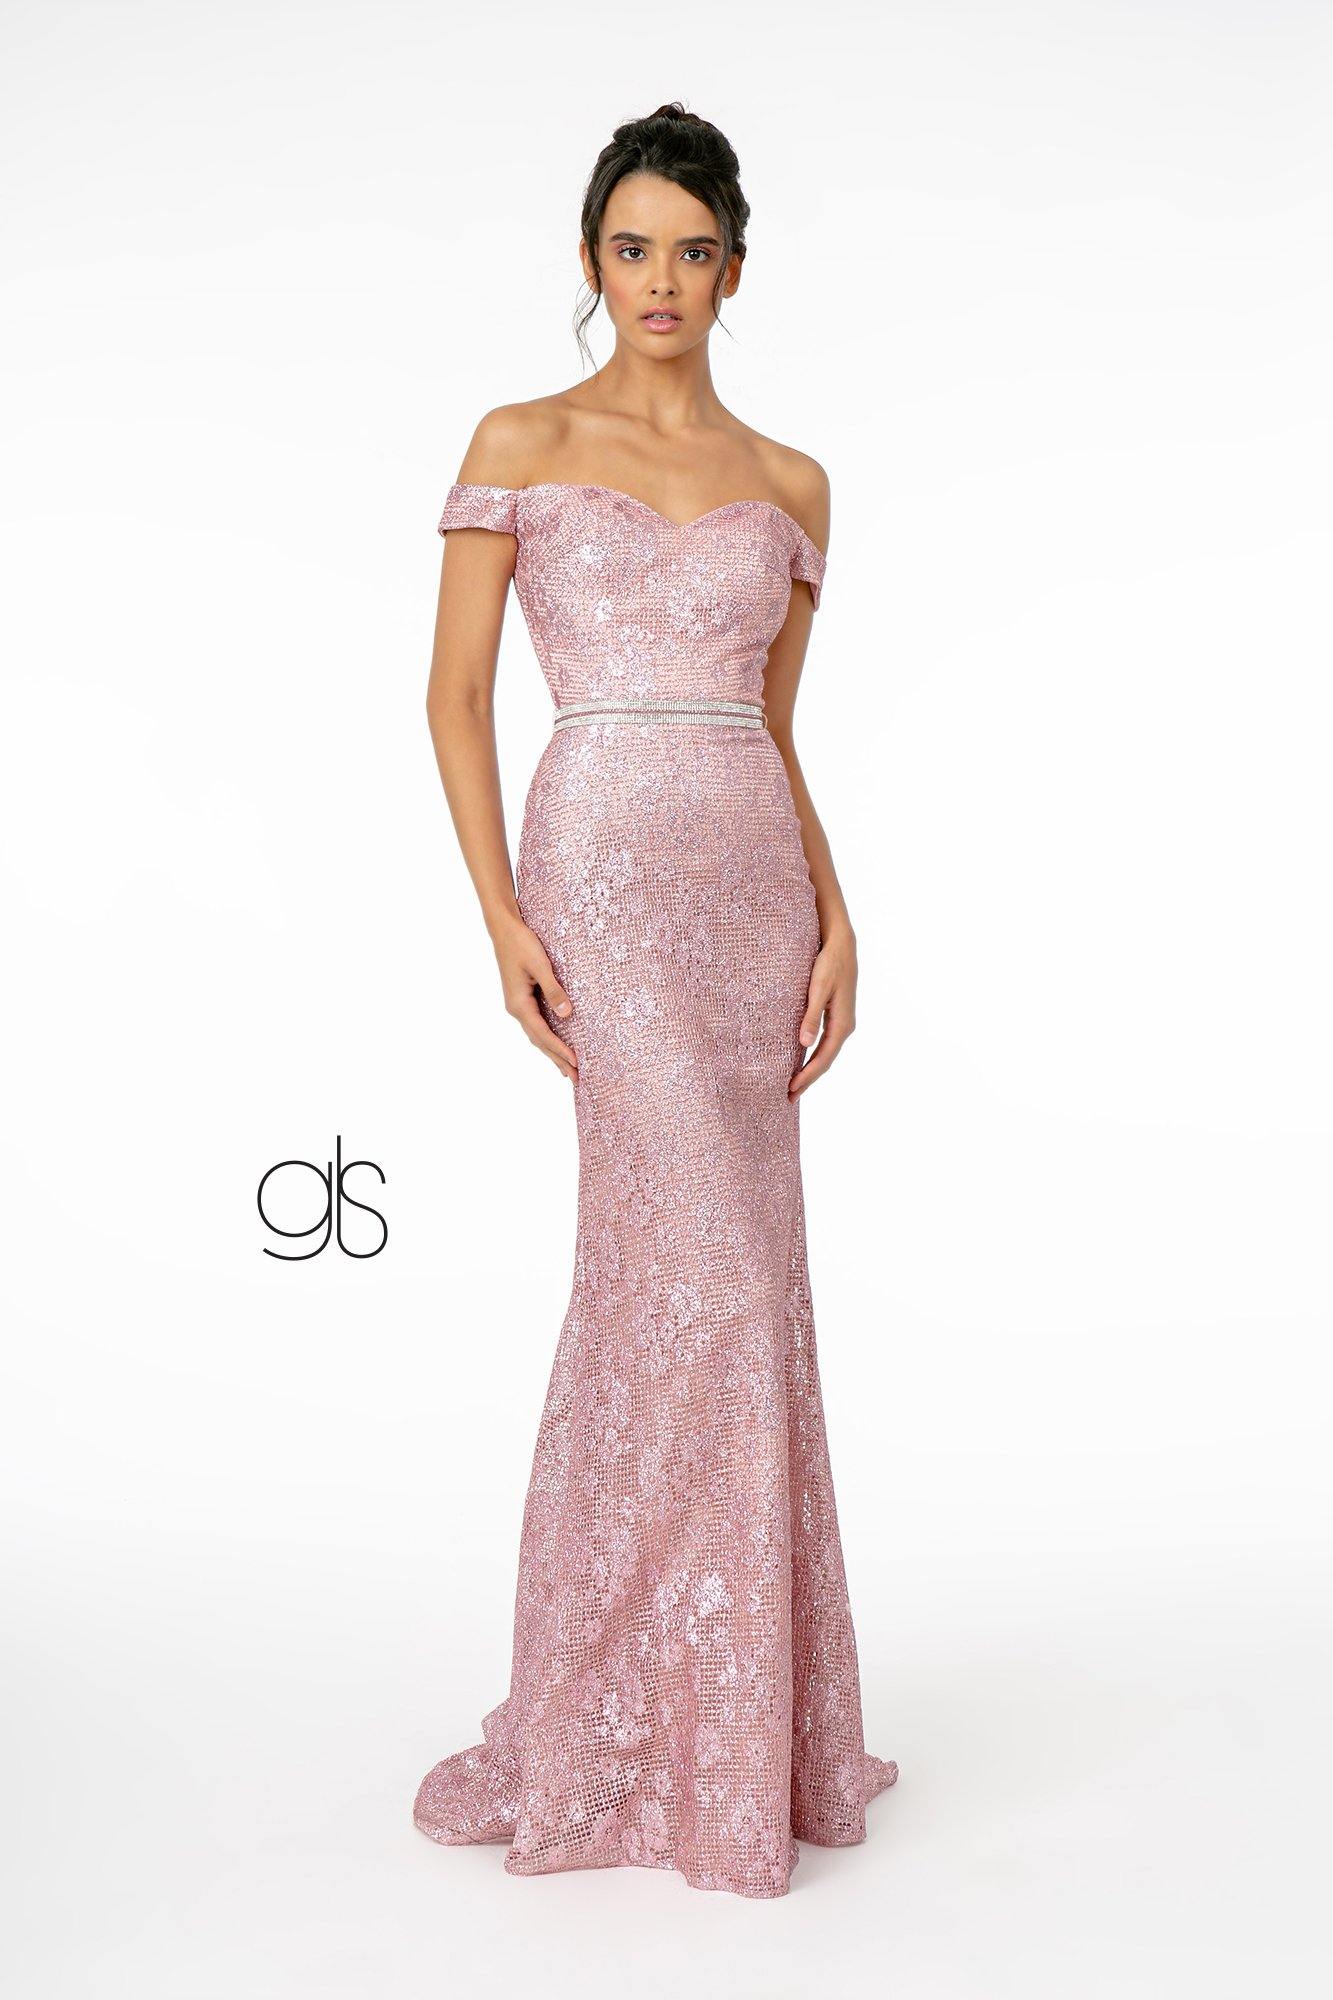 Glitter Netting Mermaid Long Prom Dress - The Dress Outlet Elizabeth K